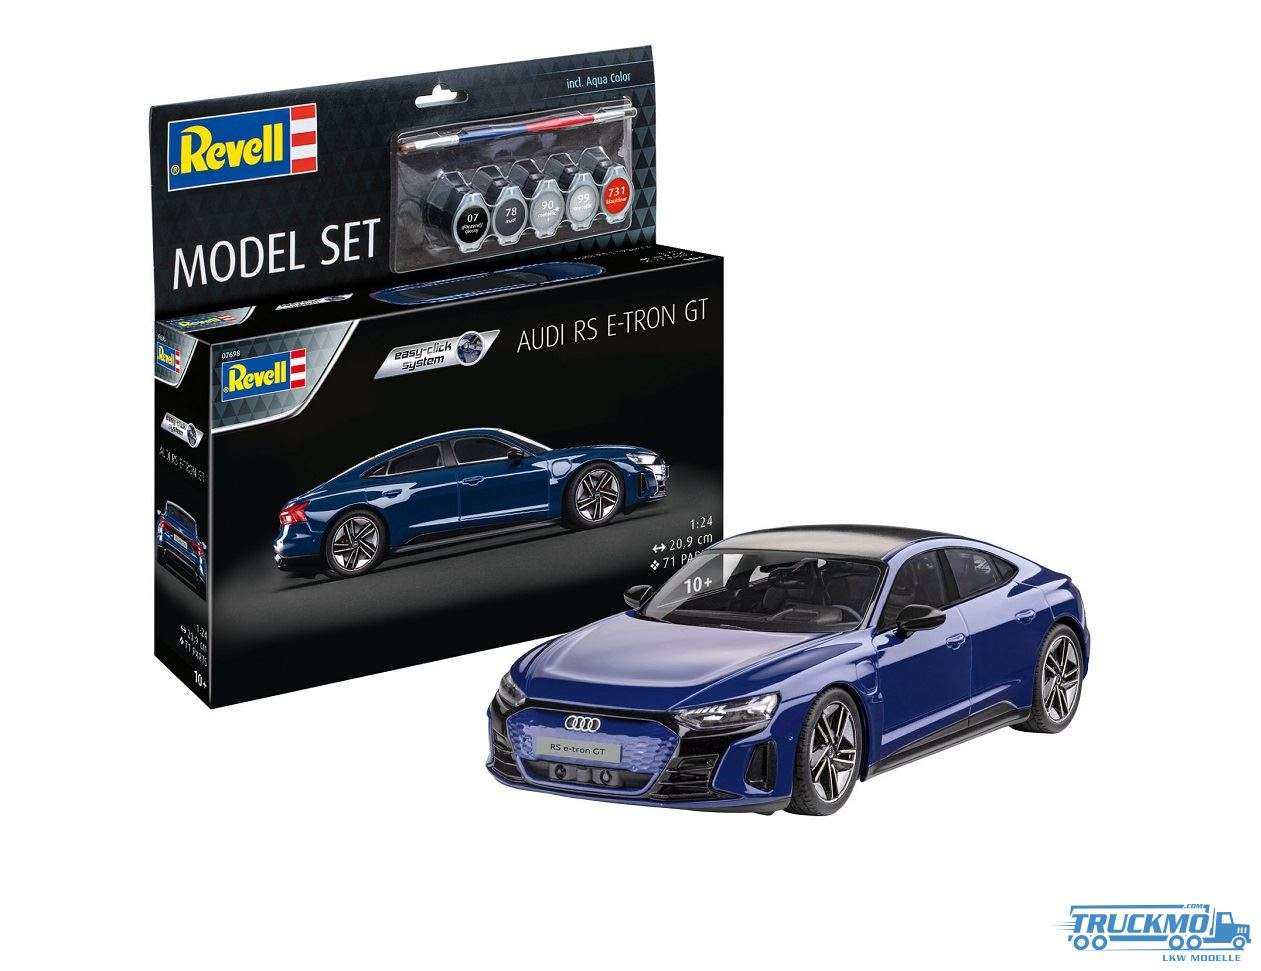 Revell Model Set Audi e-tron GT easy click system 67698